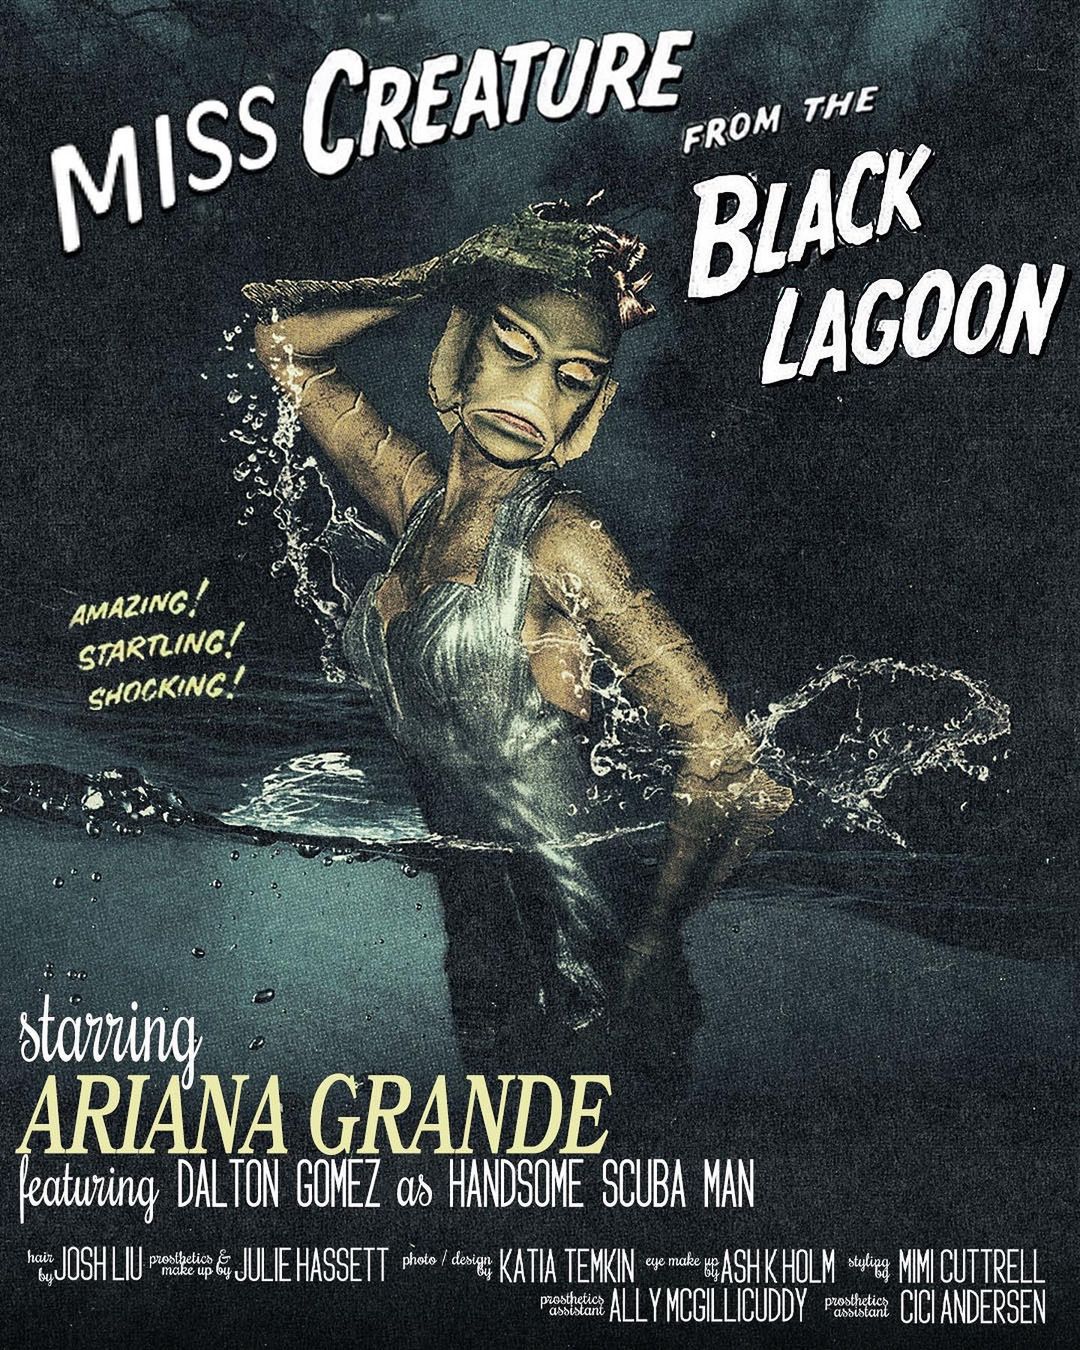 ¡Ariana Grande es la criatura de la Laguna Negra! - Photo 3